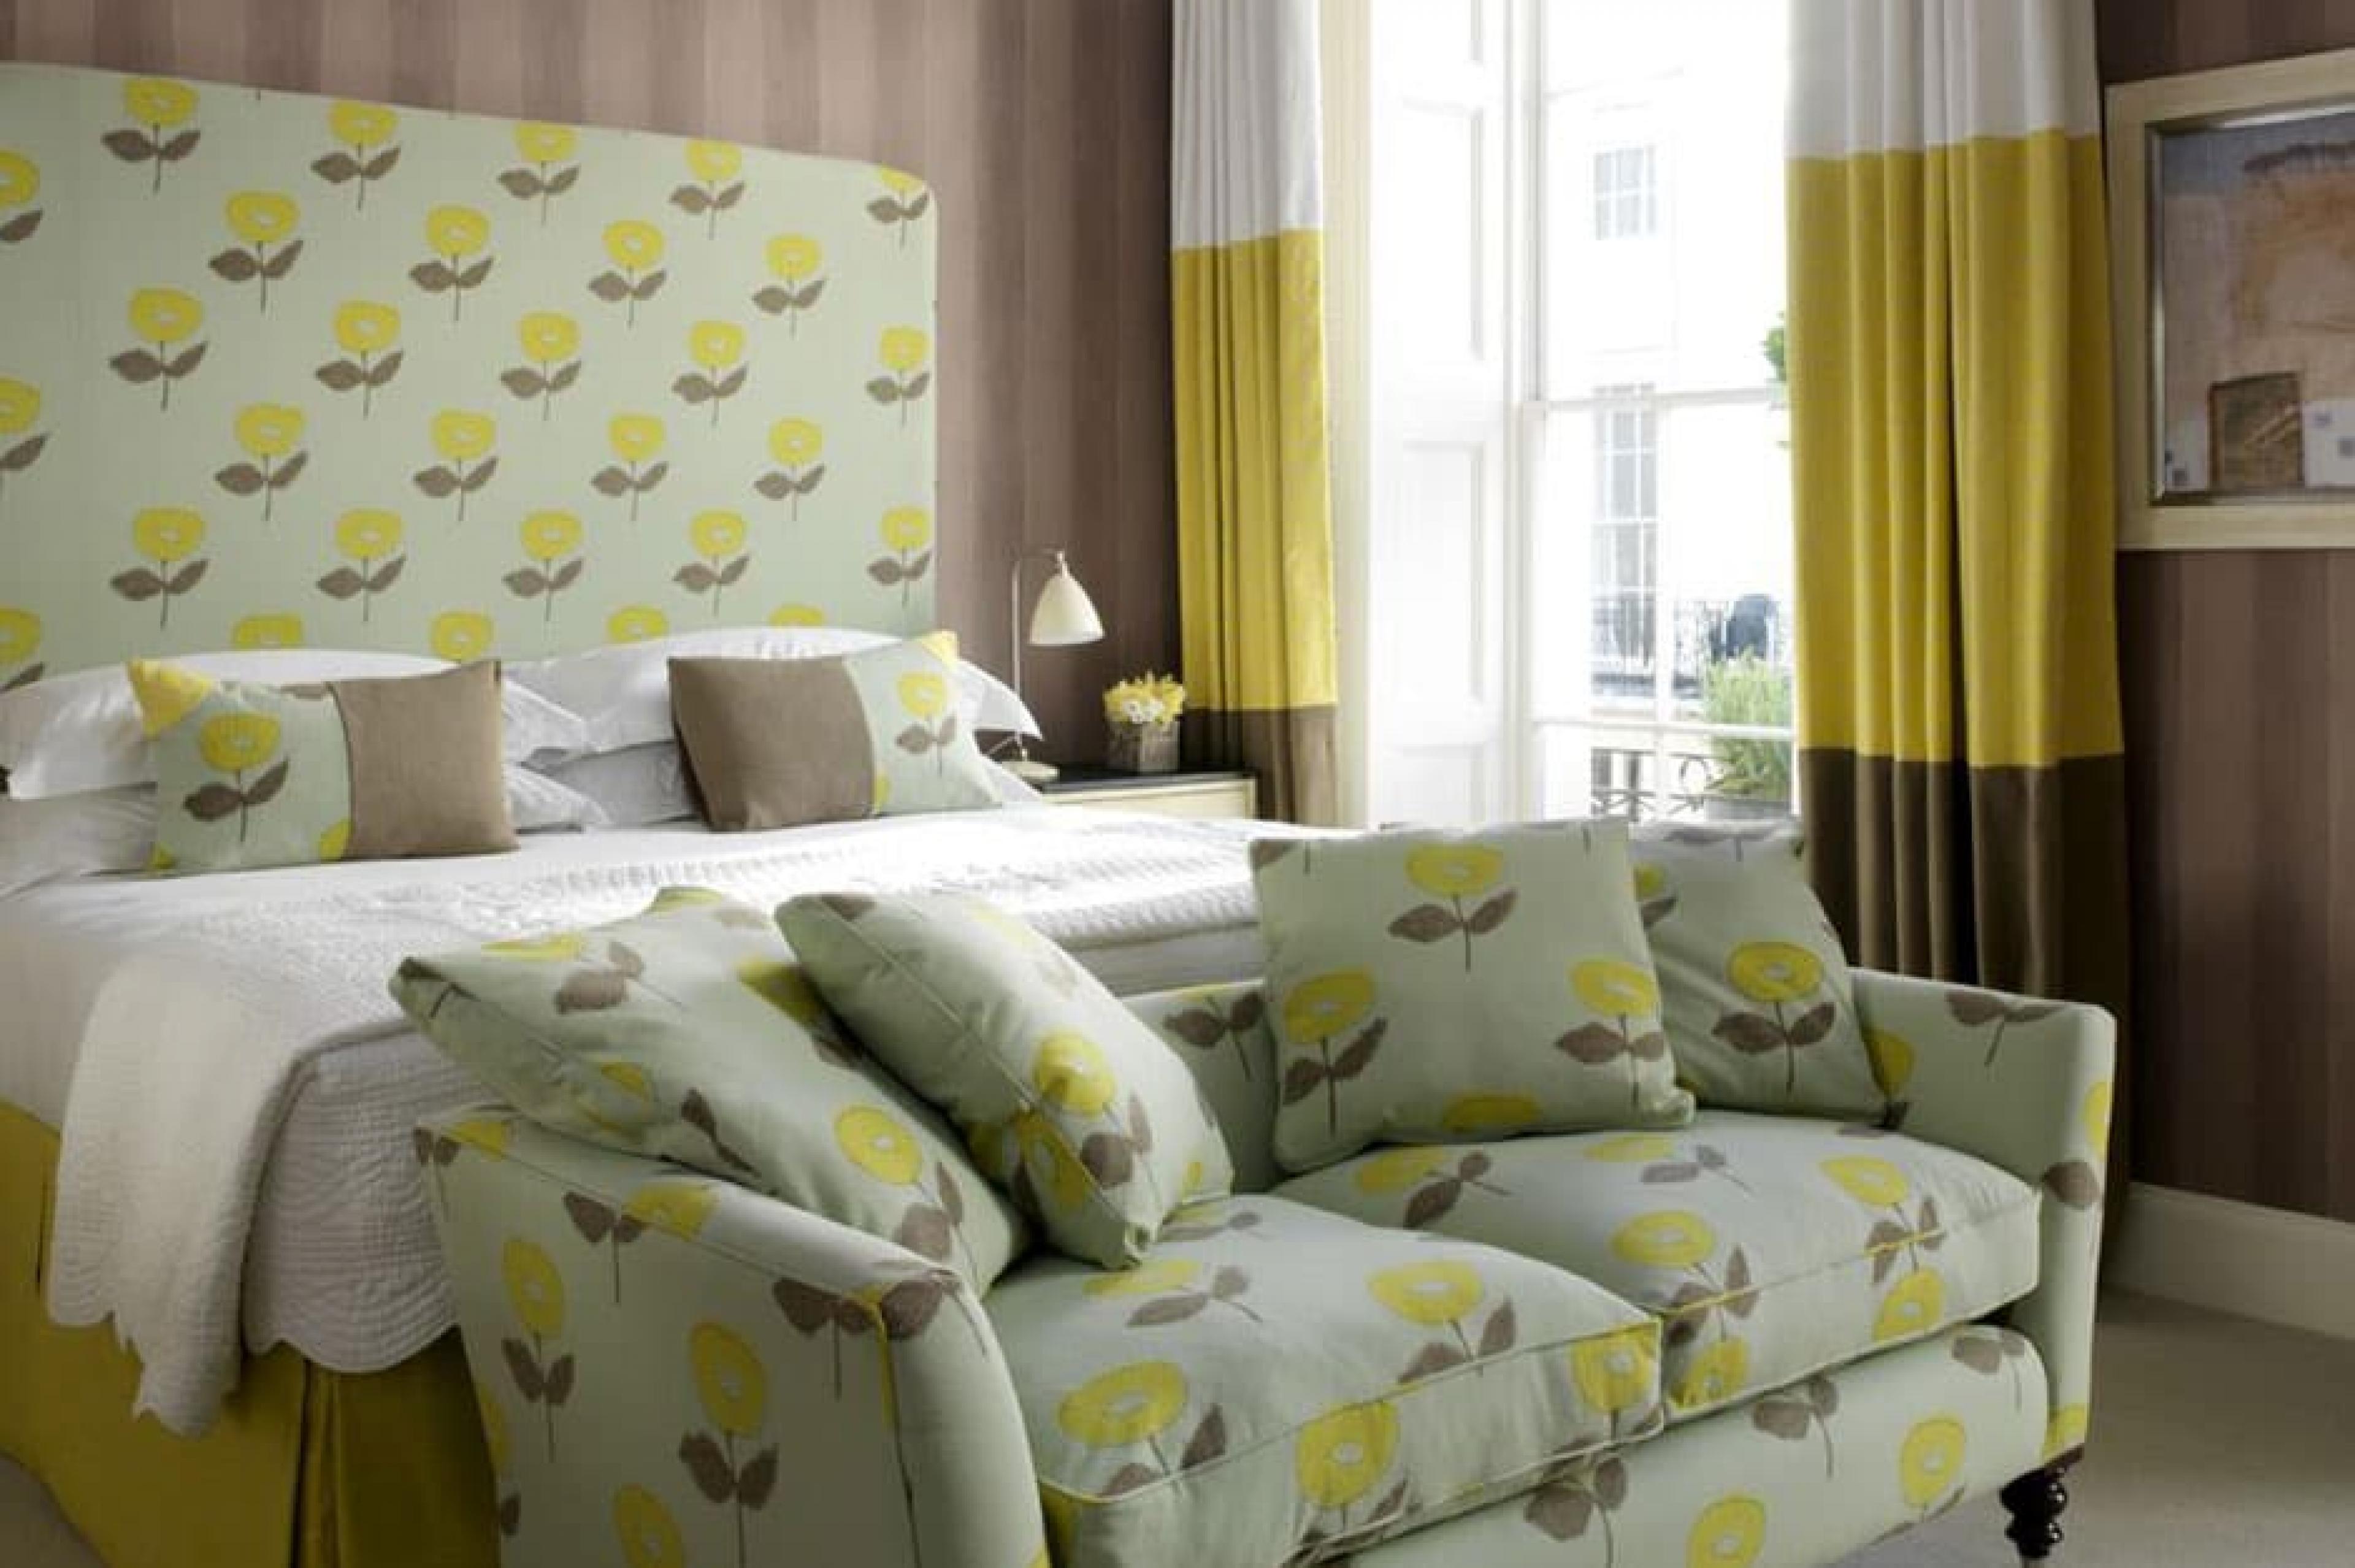 Suite at Haymarket Hotel, London, England